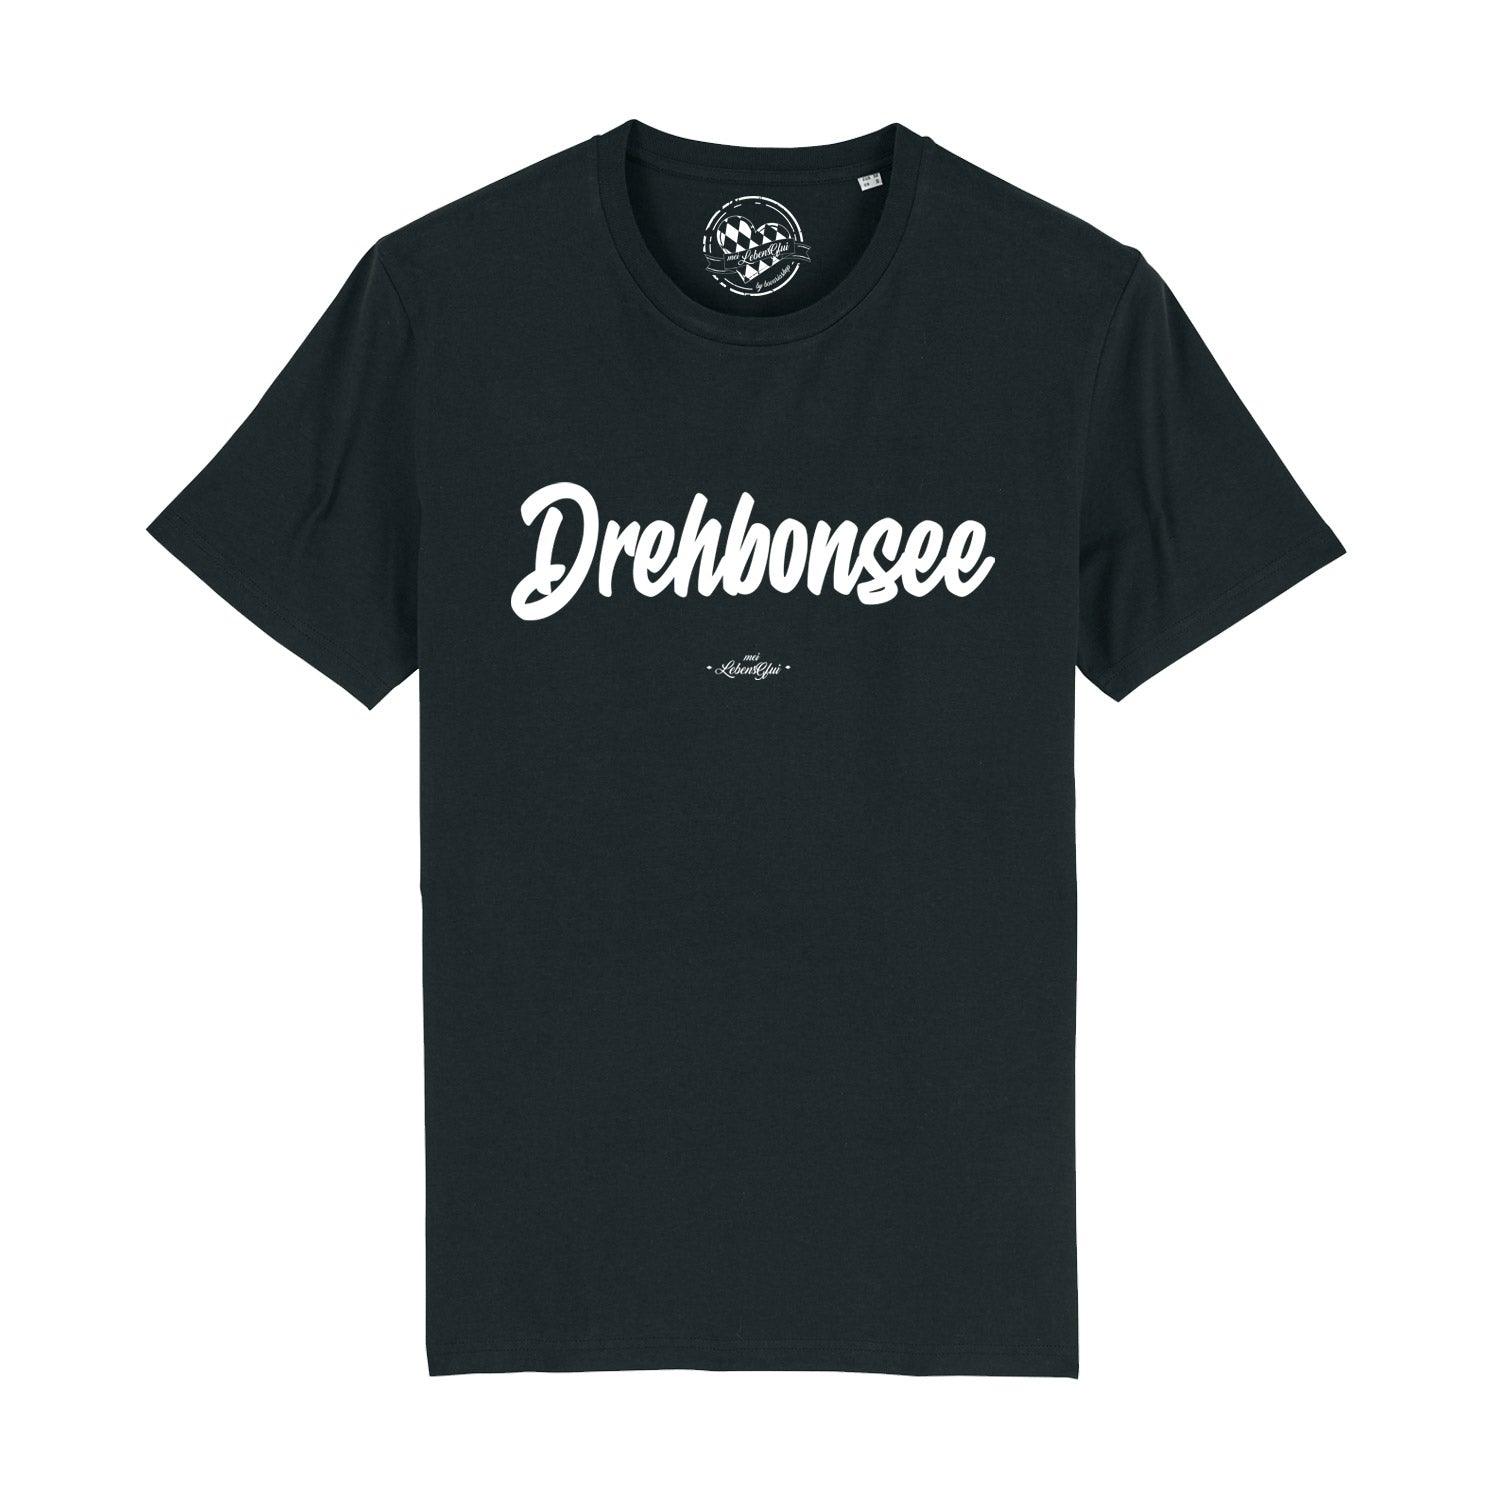 Herren T-Shirt "Drehbonsee" - bavariashop - mei LebensGfui